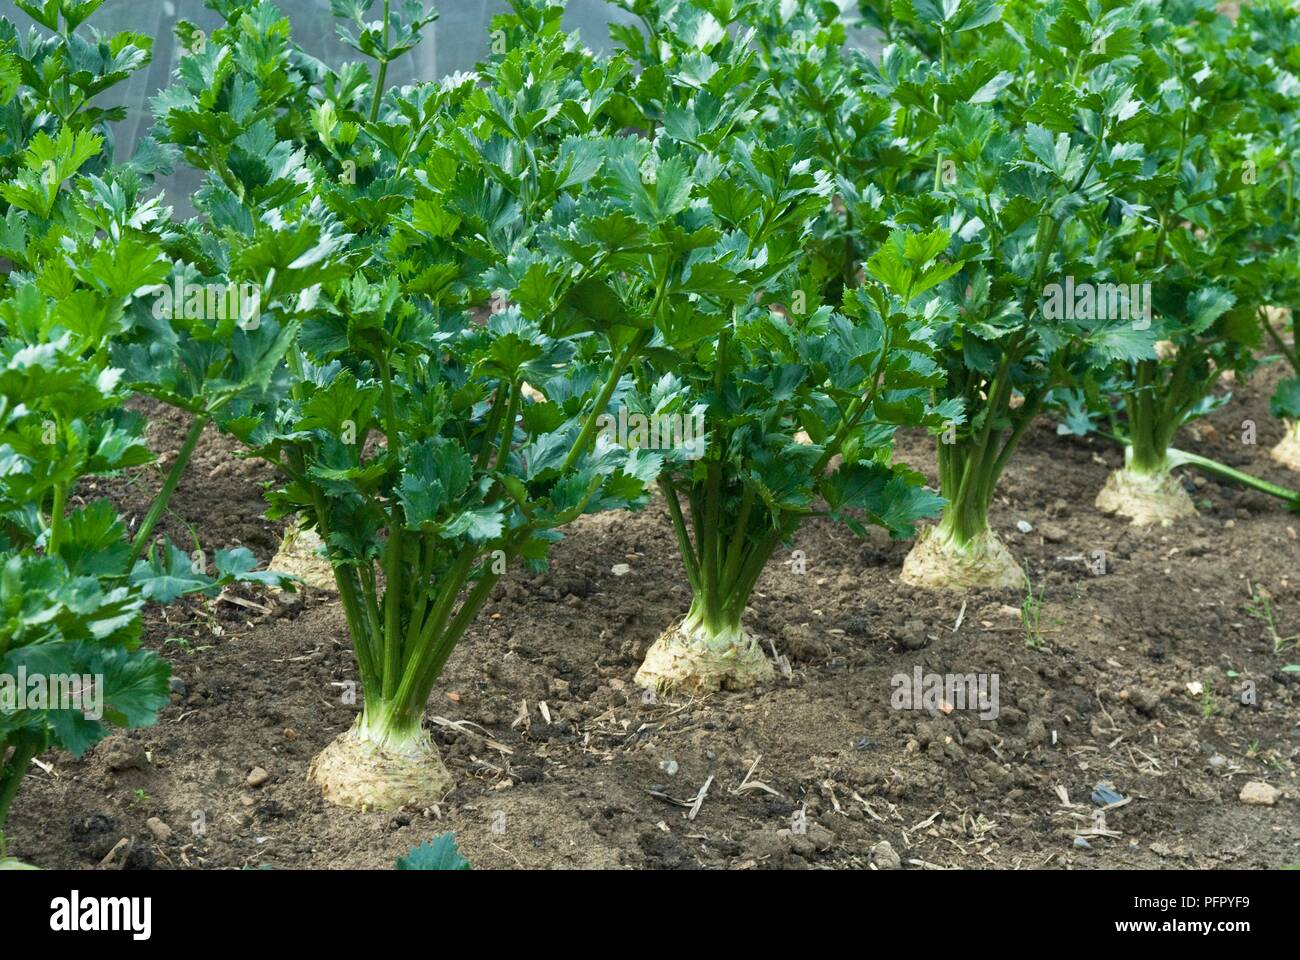 Rows of celeriac growing in soil Stock Photo